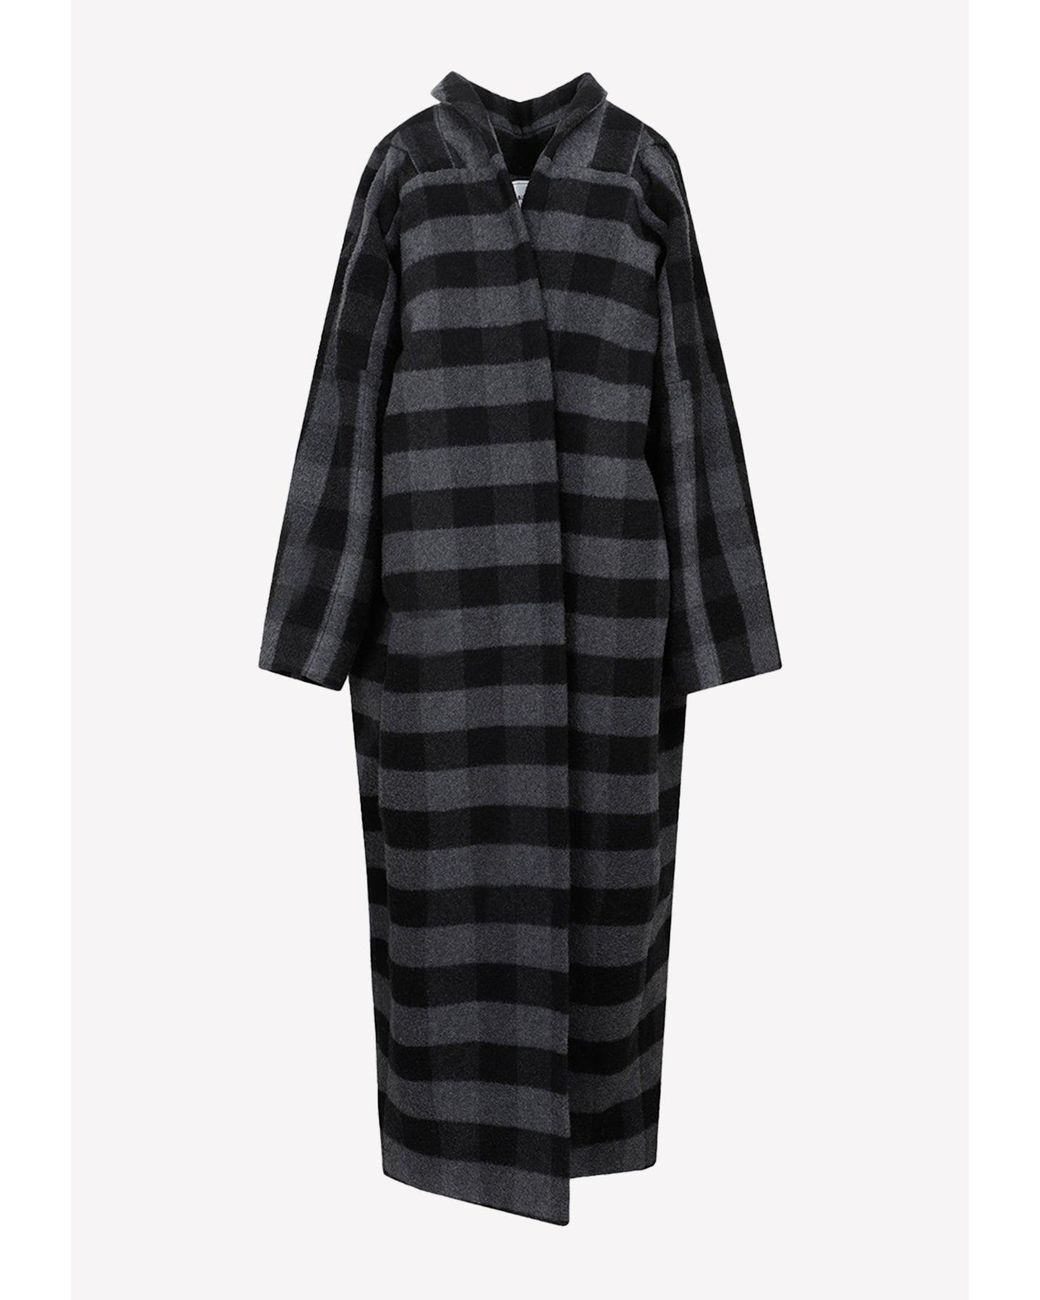 Balenciaga Oversized Swing Check Long Coat in Black | Lyst